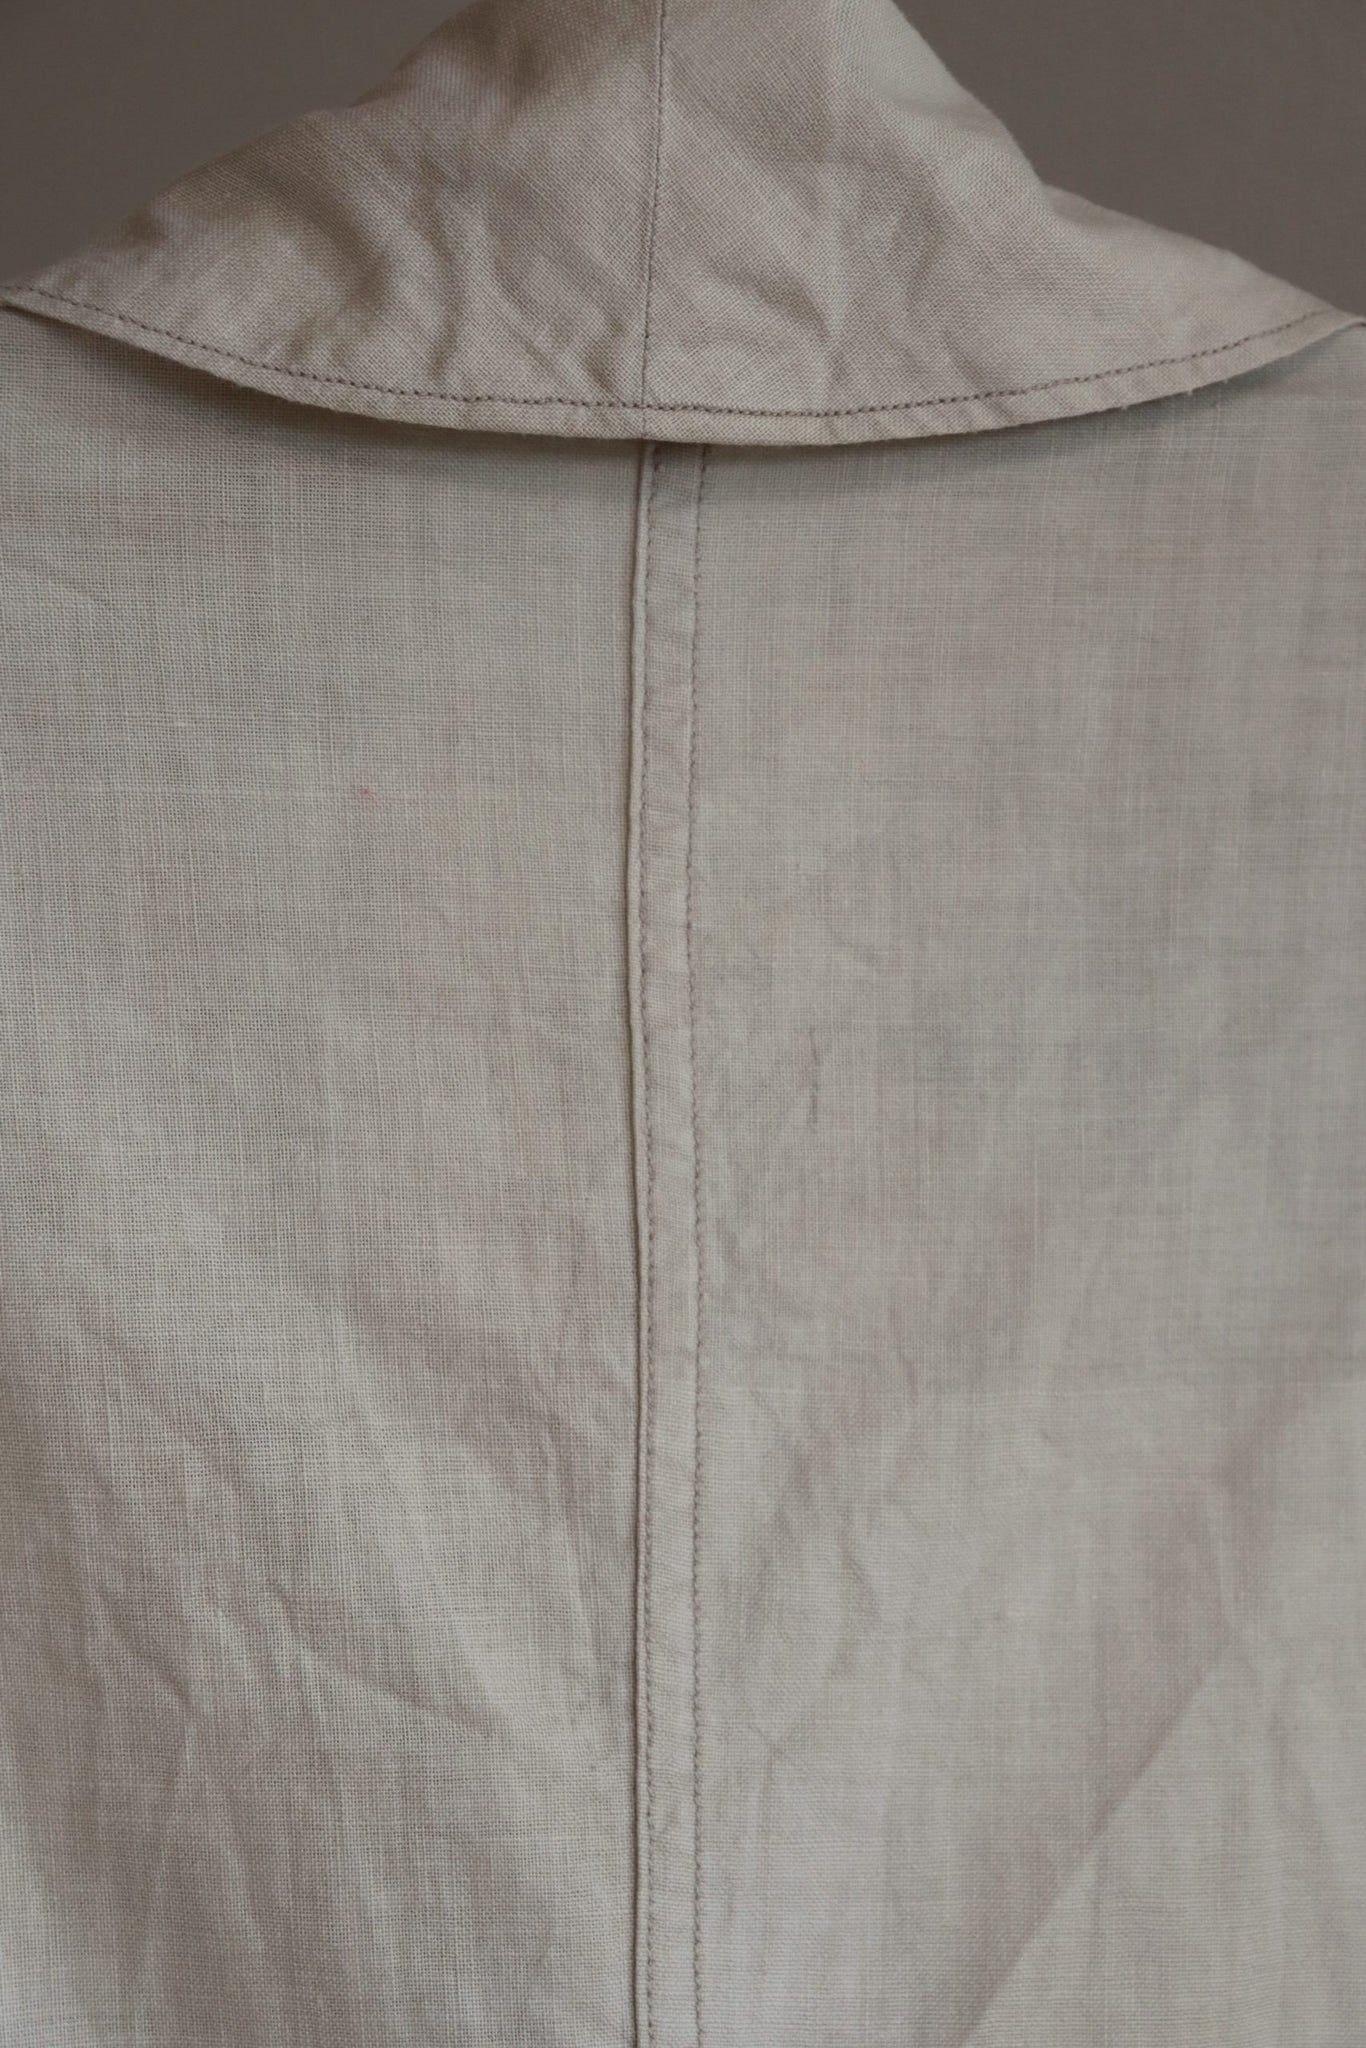 1910s Linen Duster Jacket